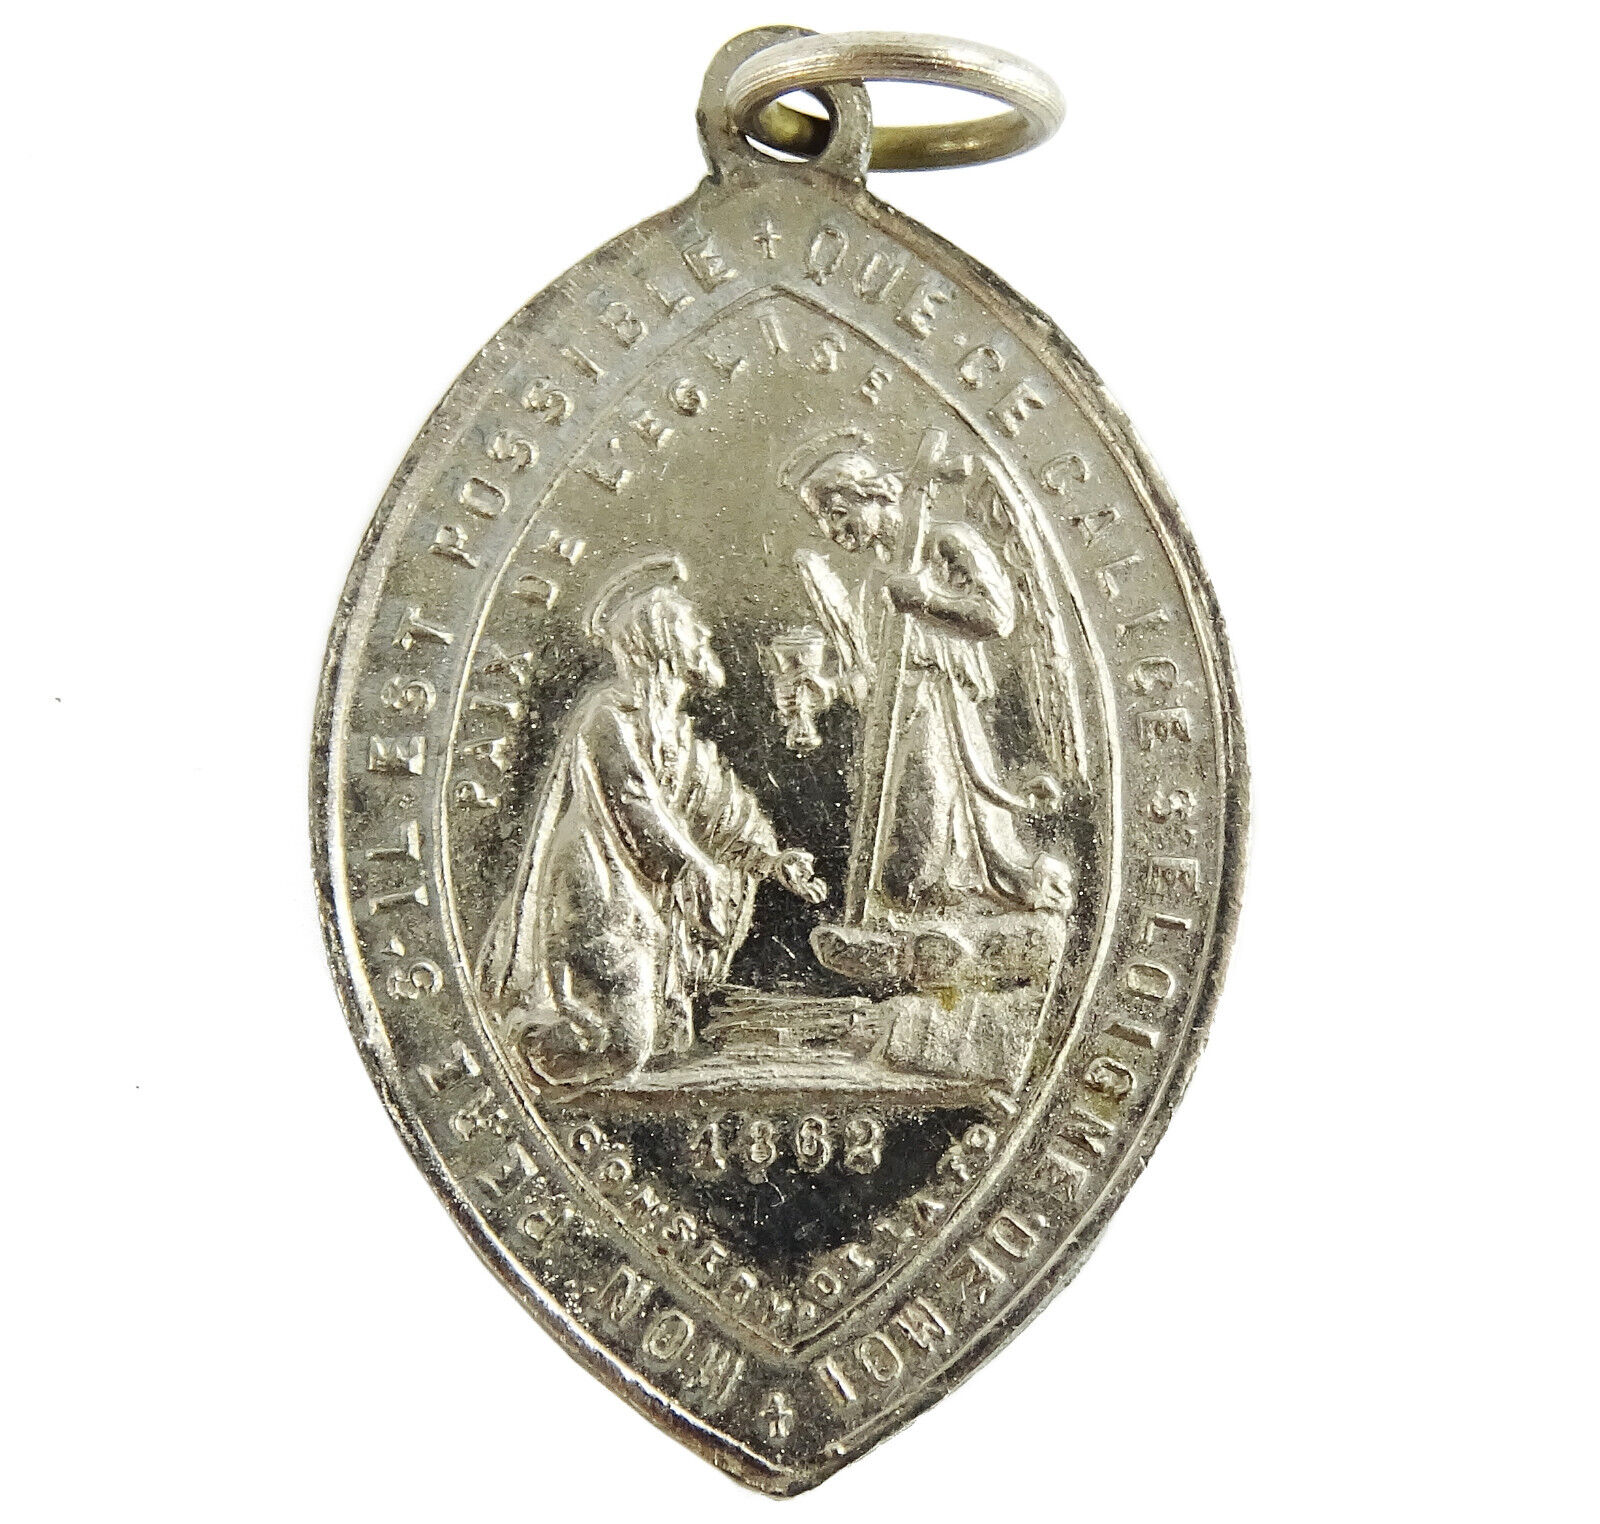 1862 Antique Medal Jesus Praying in Garden French Maria Dolorosa 7 Sorrows